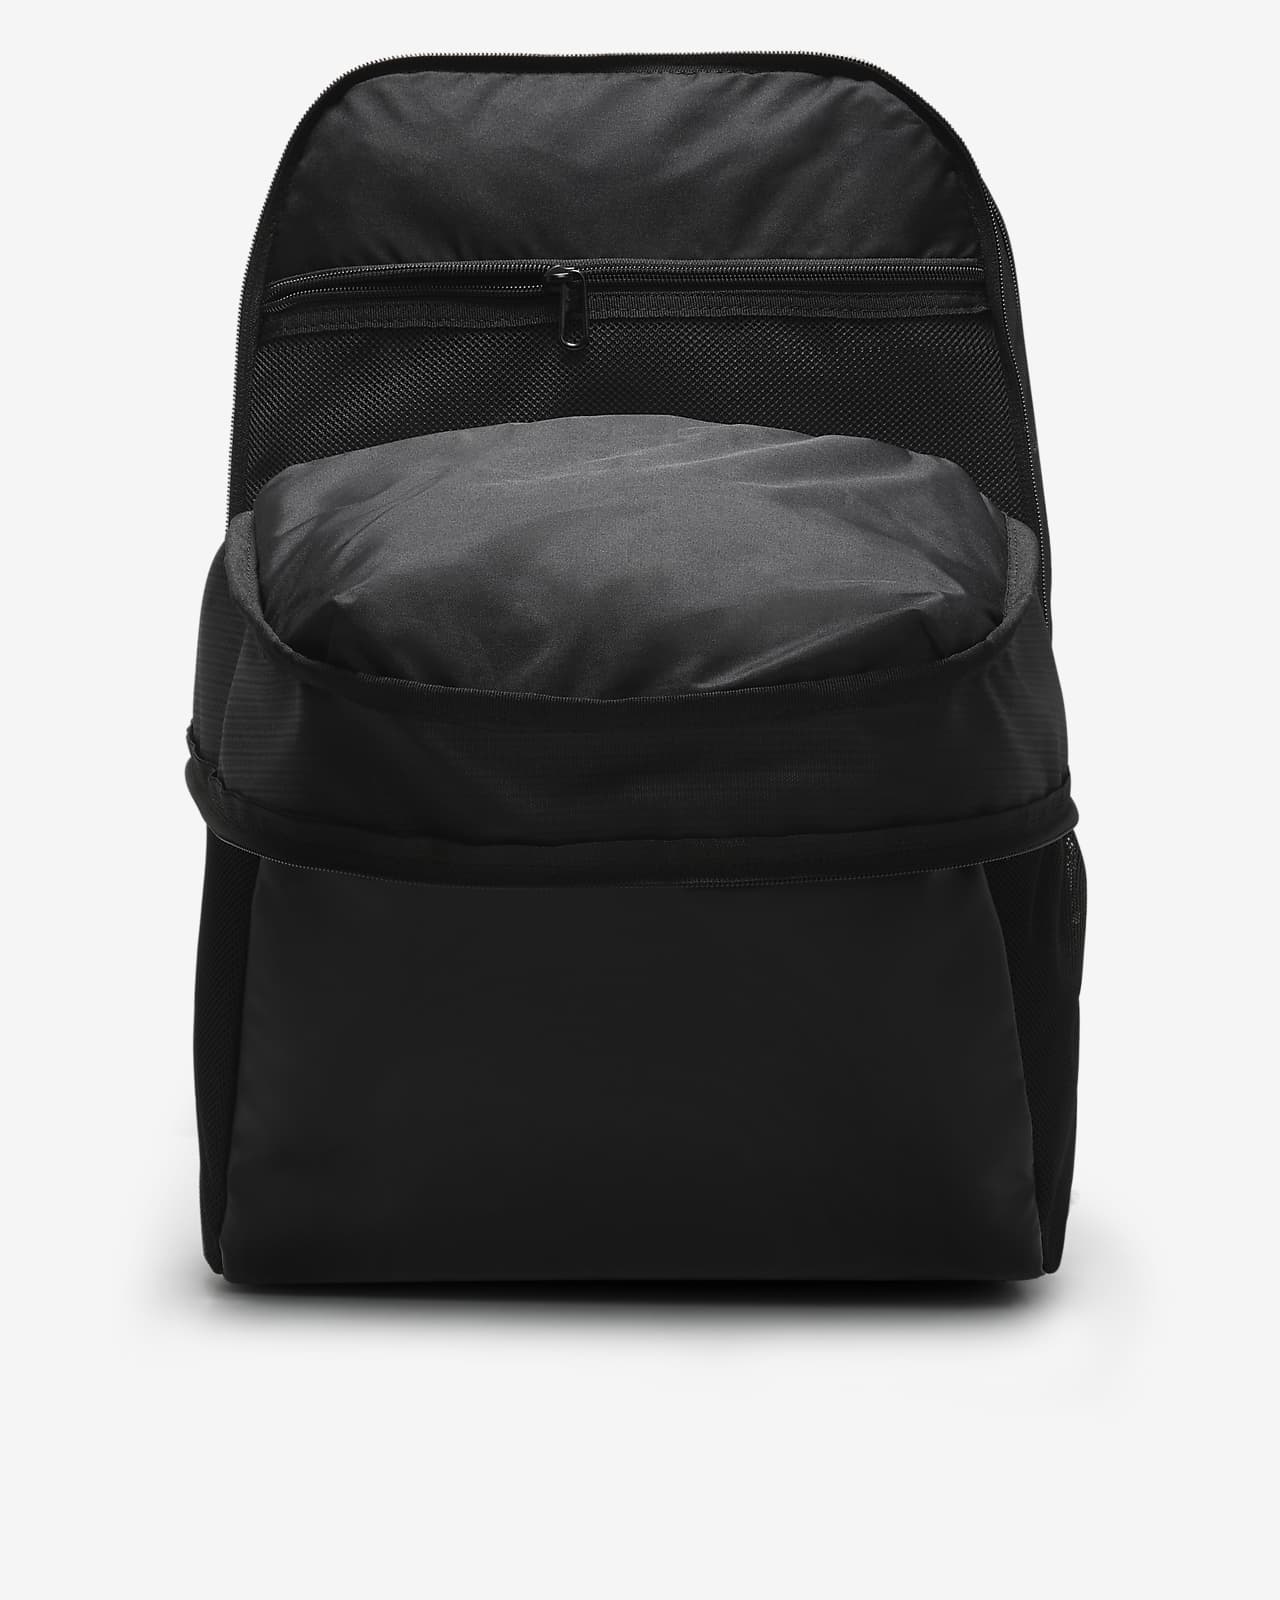 Nike Brasilia 9.5 Printed Backpack Black